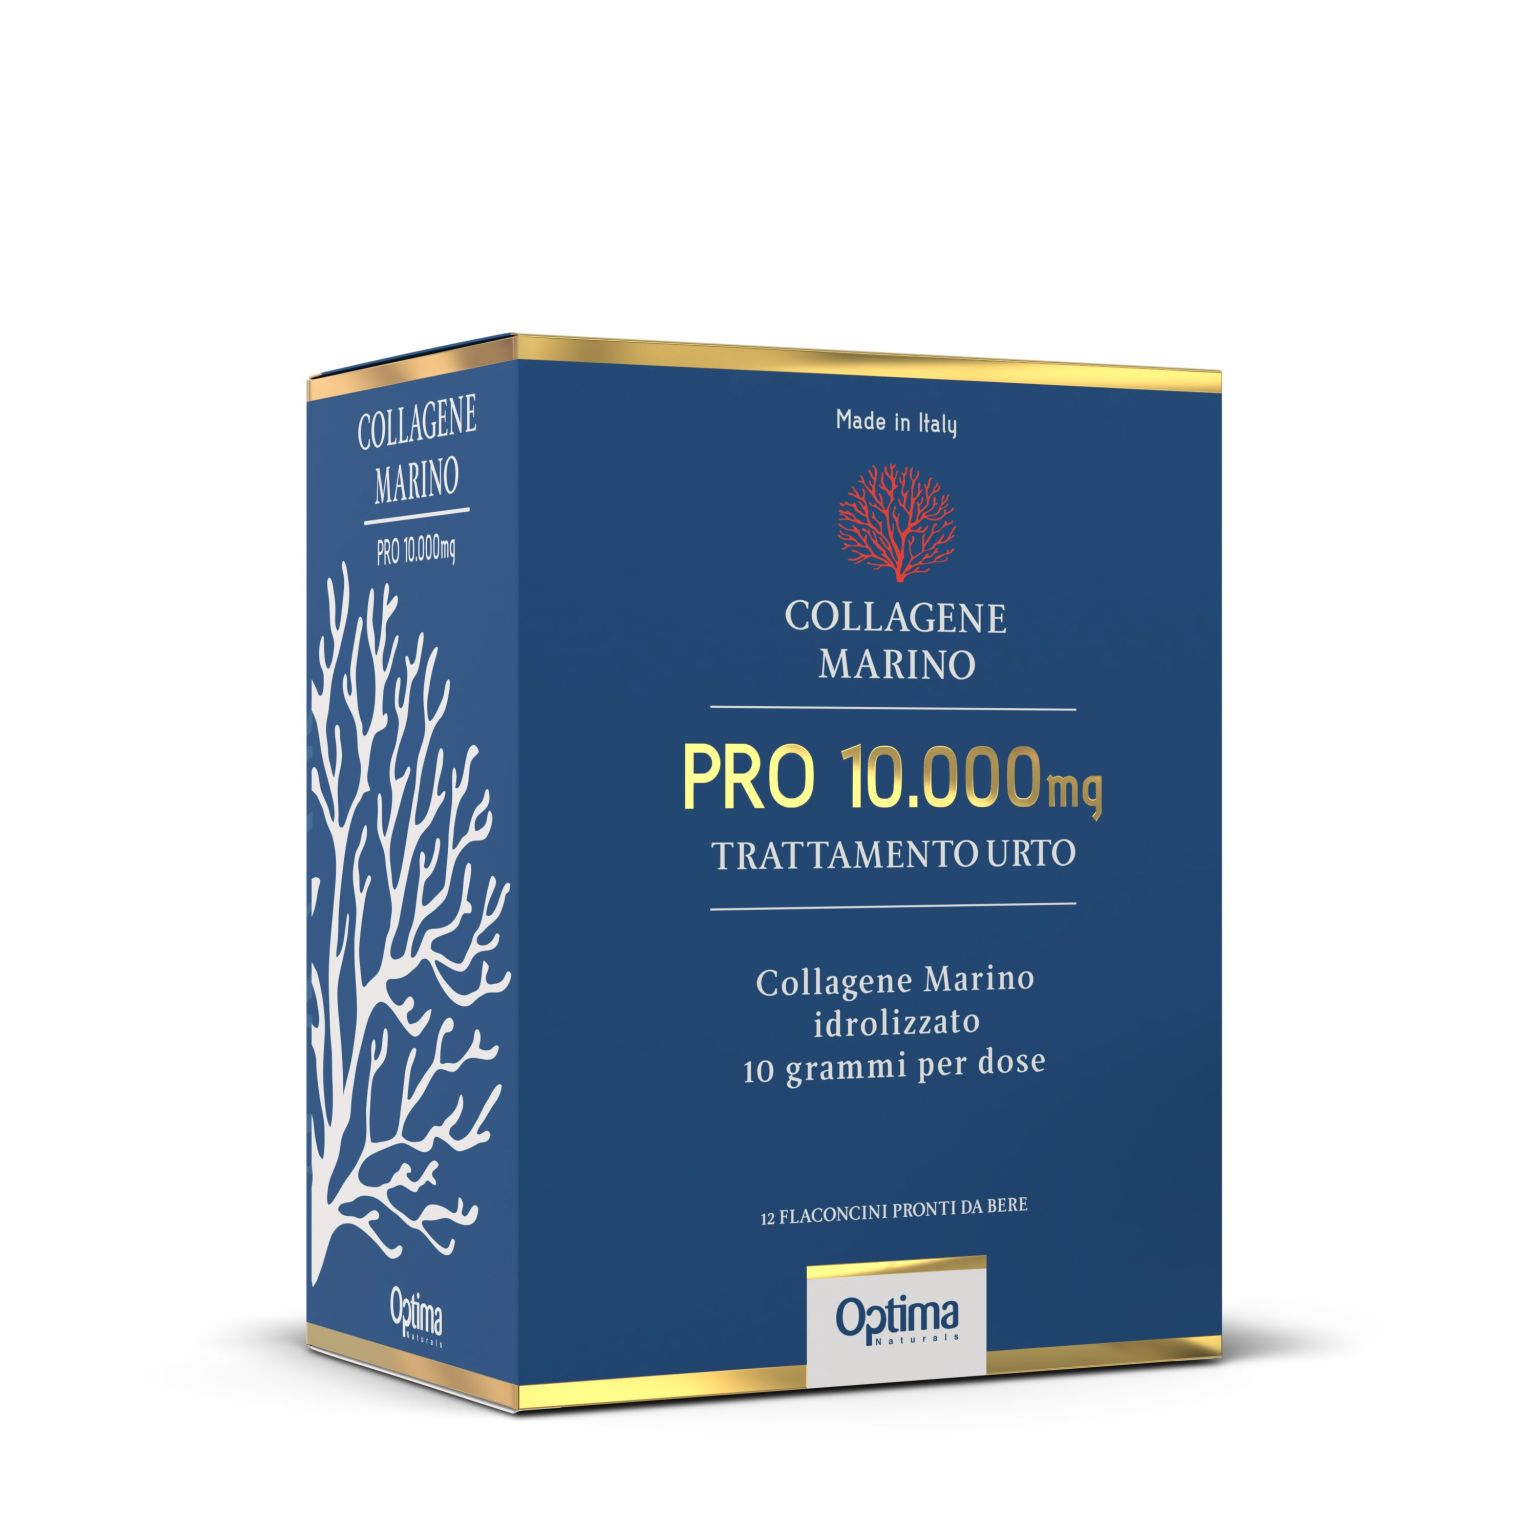 980515326 - Collagene Marino Pro 10000mg trattamento urto 12 flaconi - 4736523_3.jpg